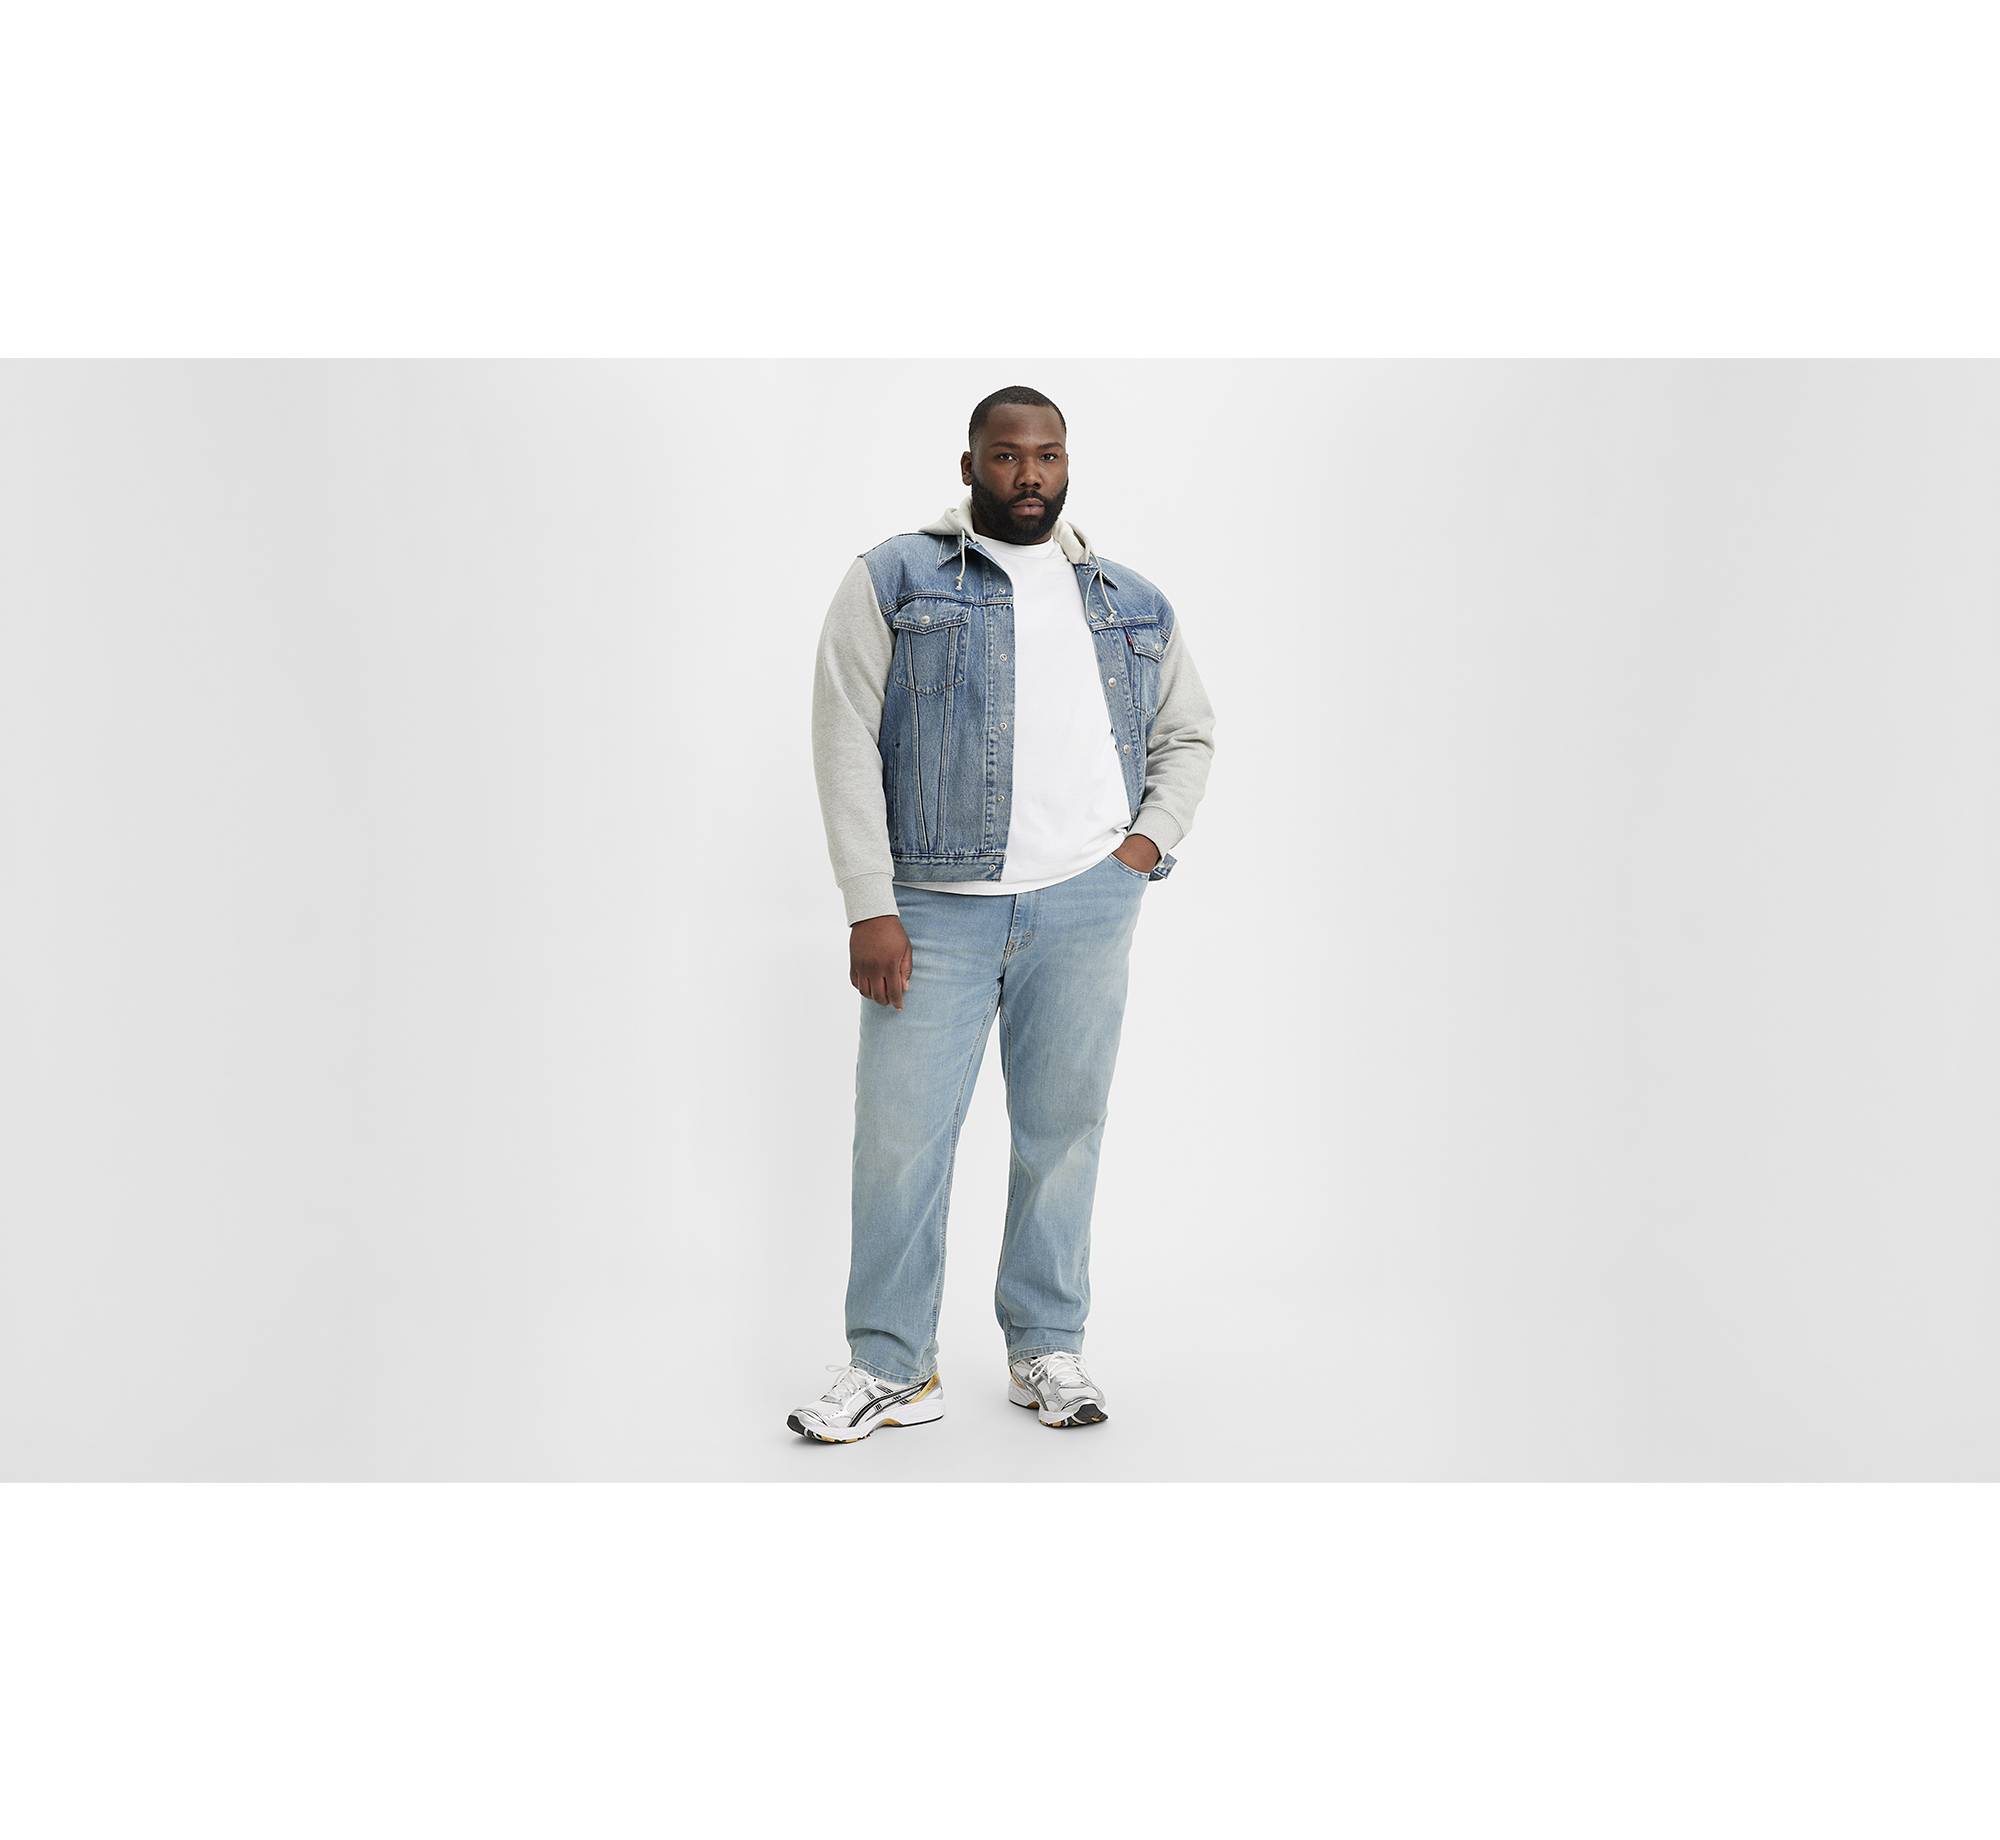 541™ Athletic Taper Men's Jeans (Big & Tall) 1